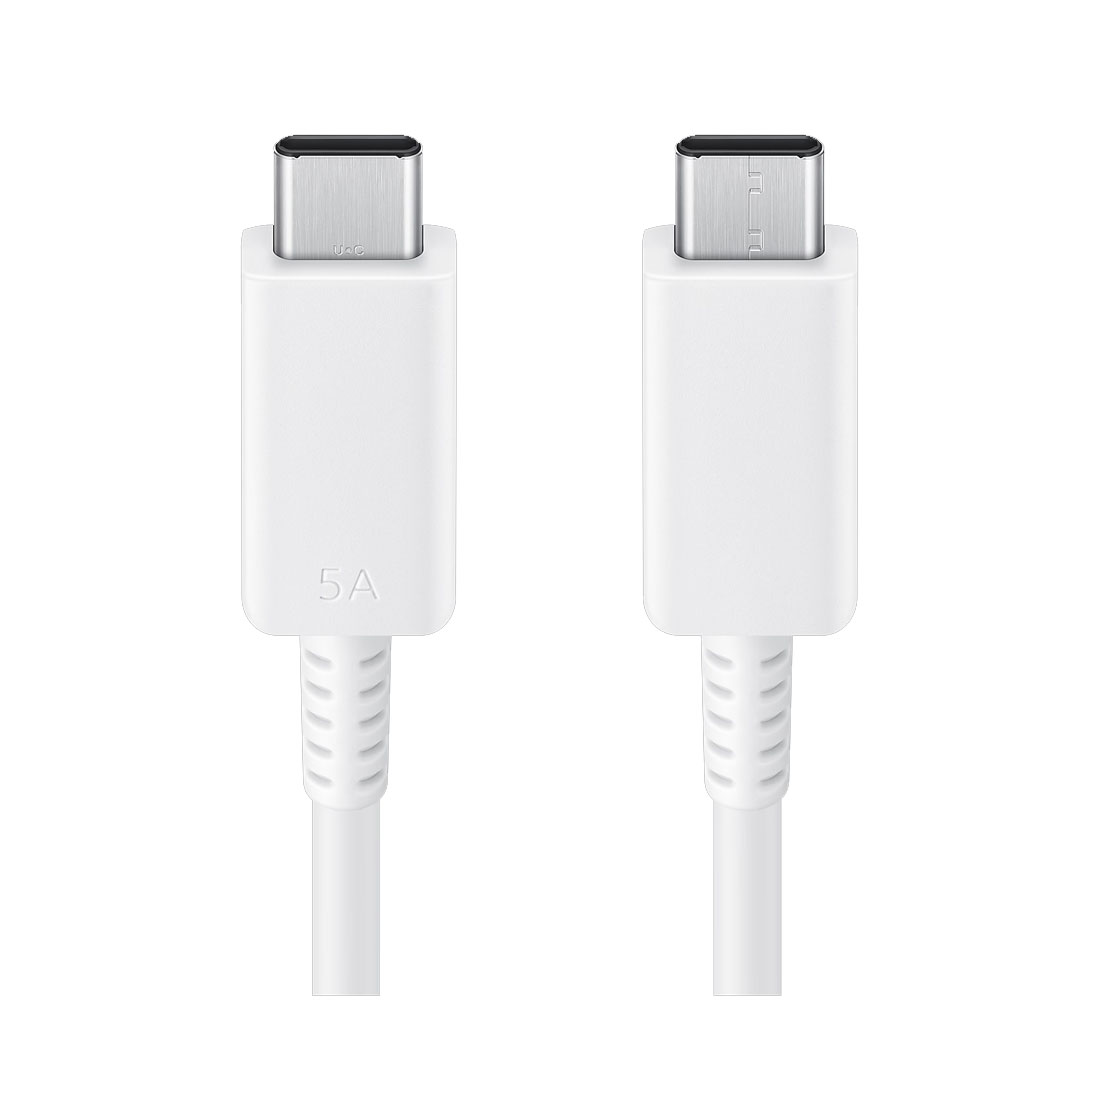 Кабель (EP-DN975) USB Type C на USB Type C, 5A, длина 1.8 метра, цвет белый